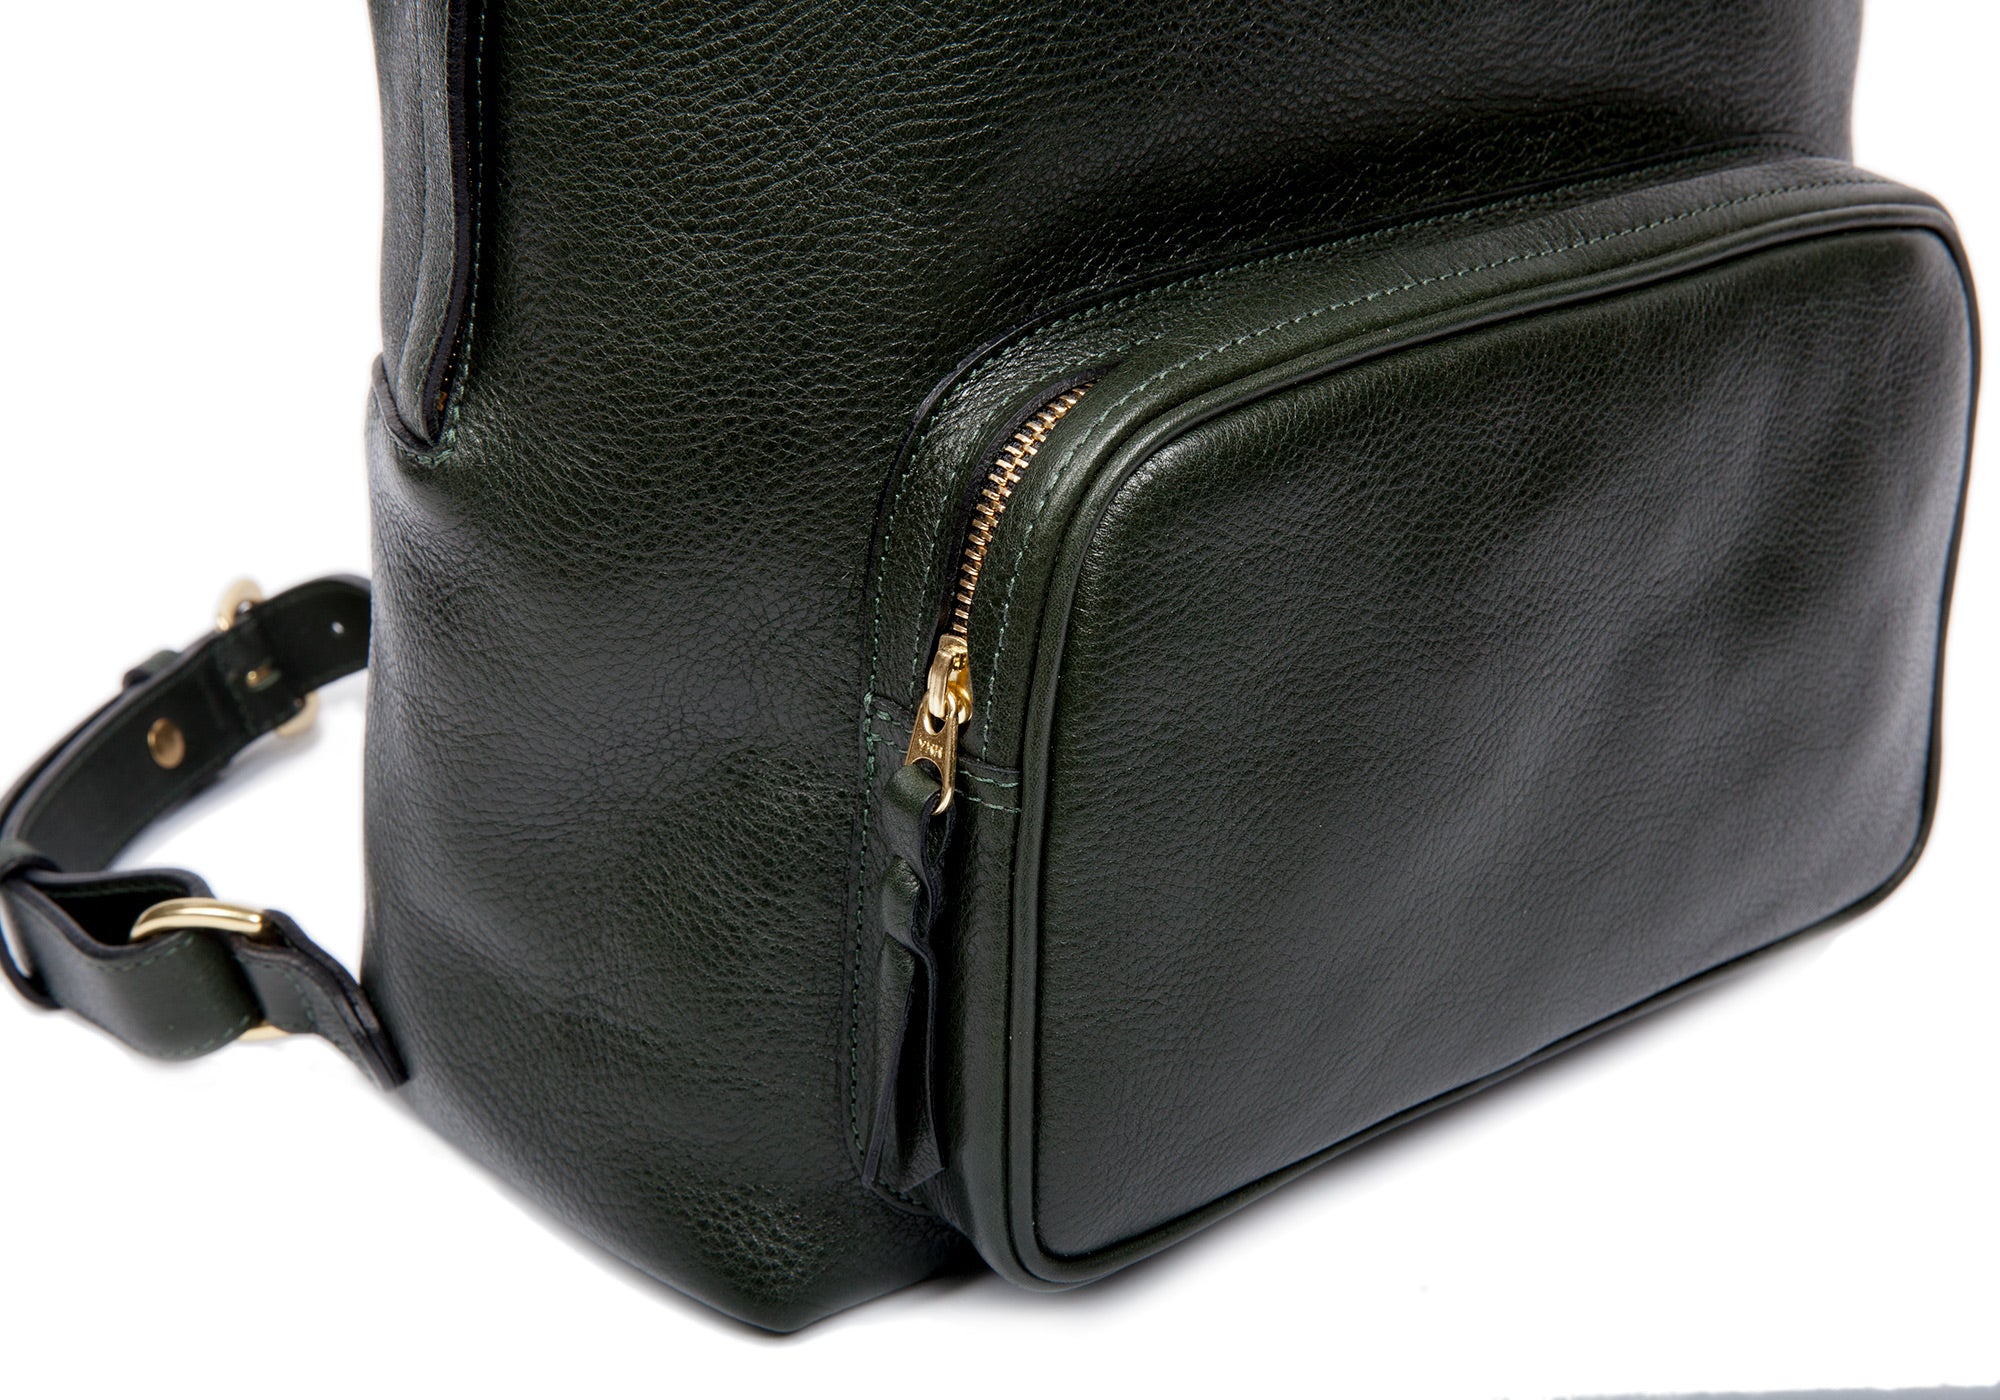 Leather Zipper Backpack Green